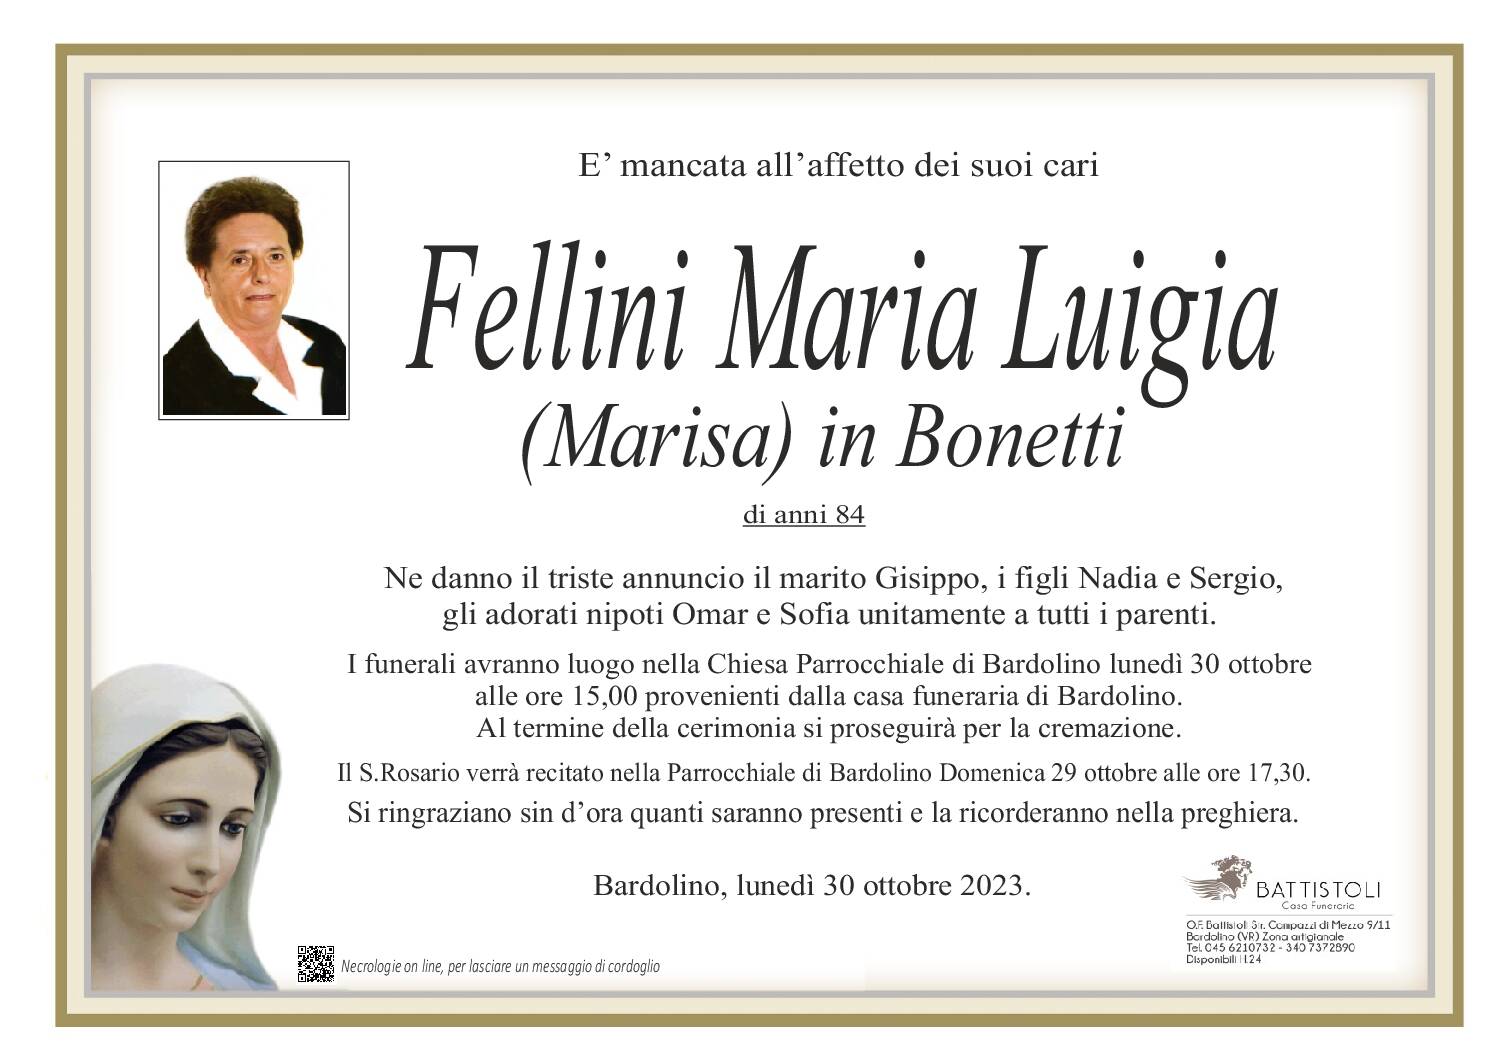 Fellini Maria Luigia